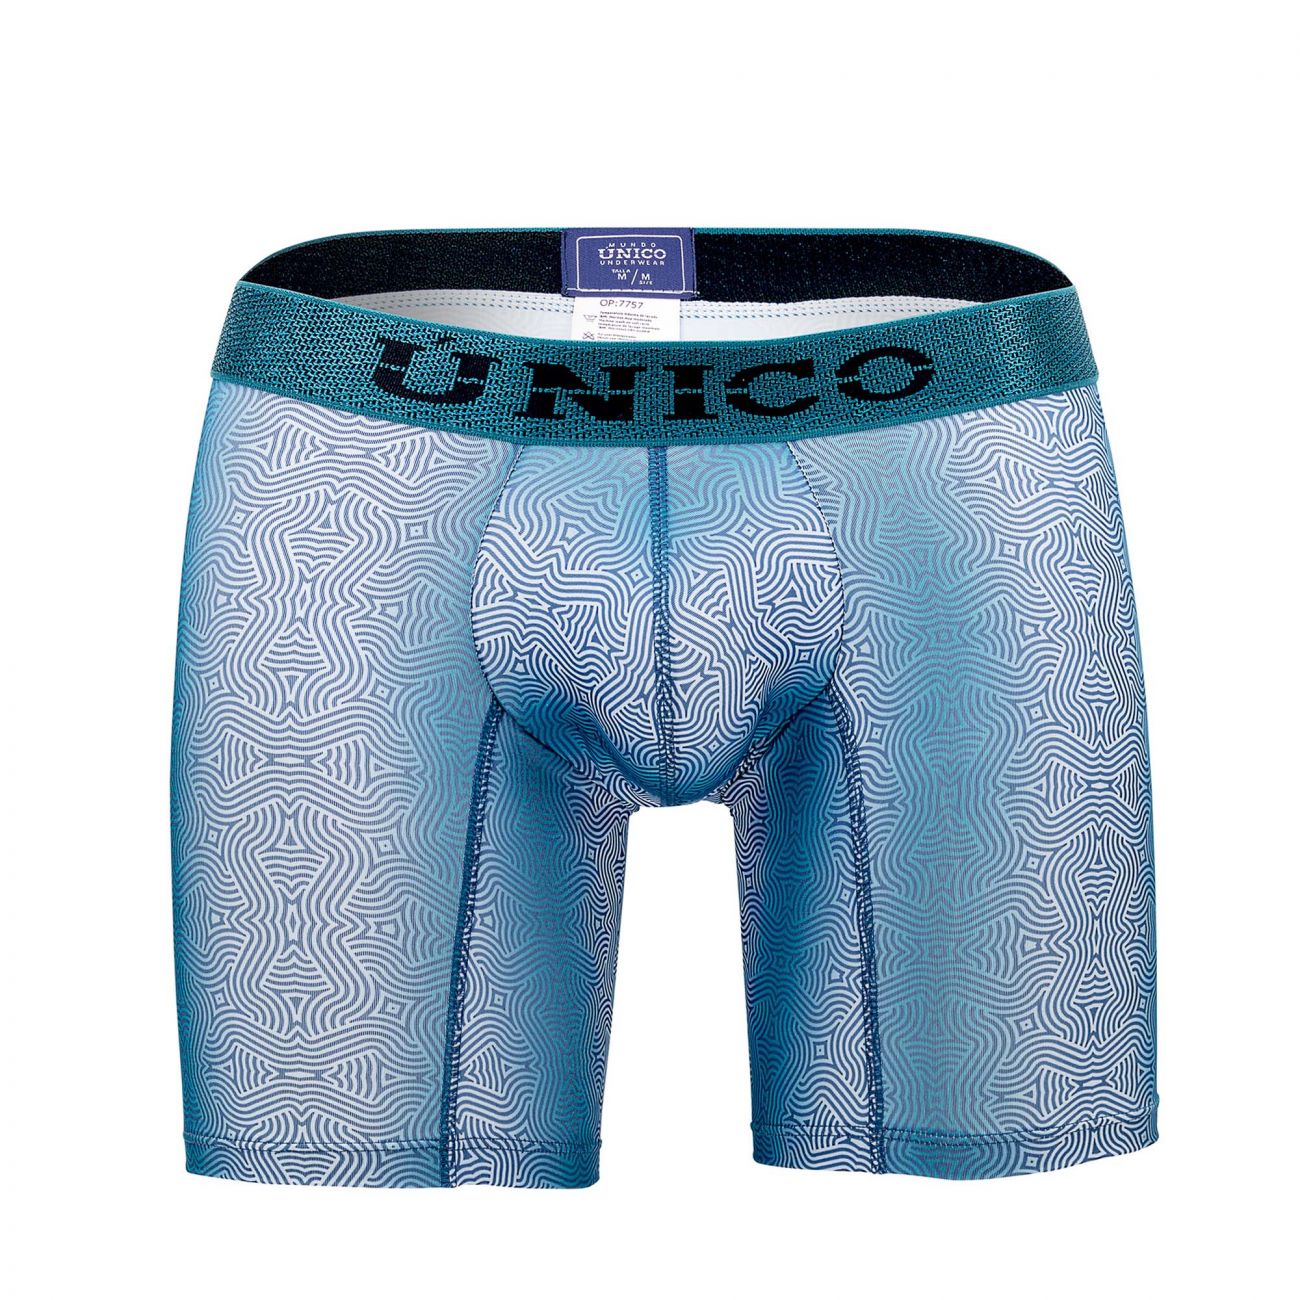 Unico 1908010026129 Boxer Briefs Luminiscente Blue Printed